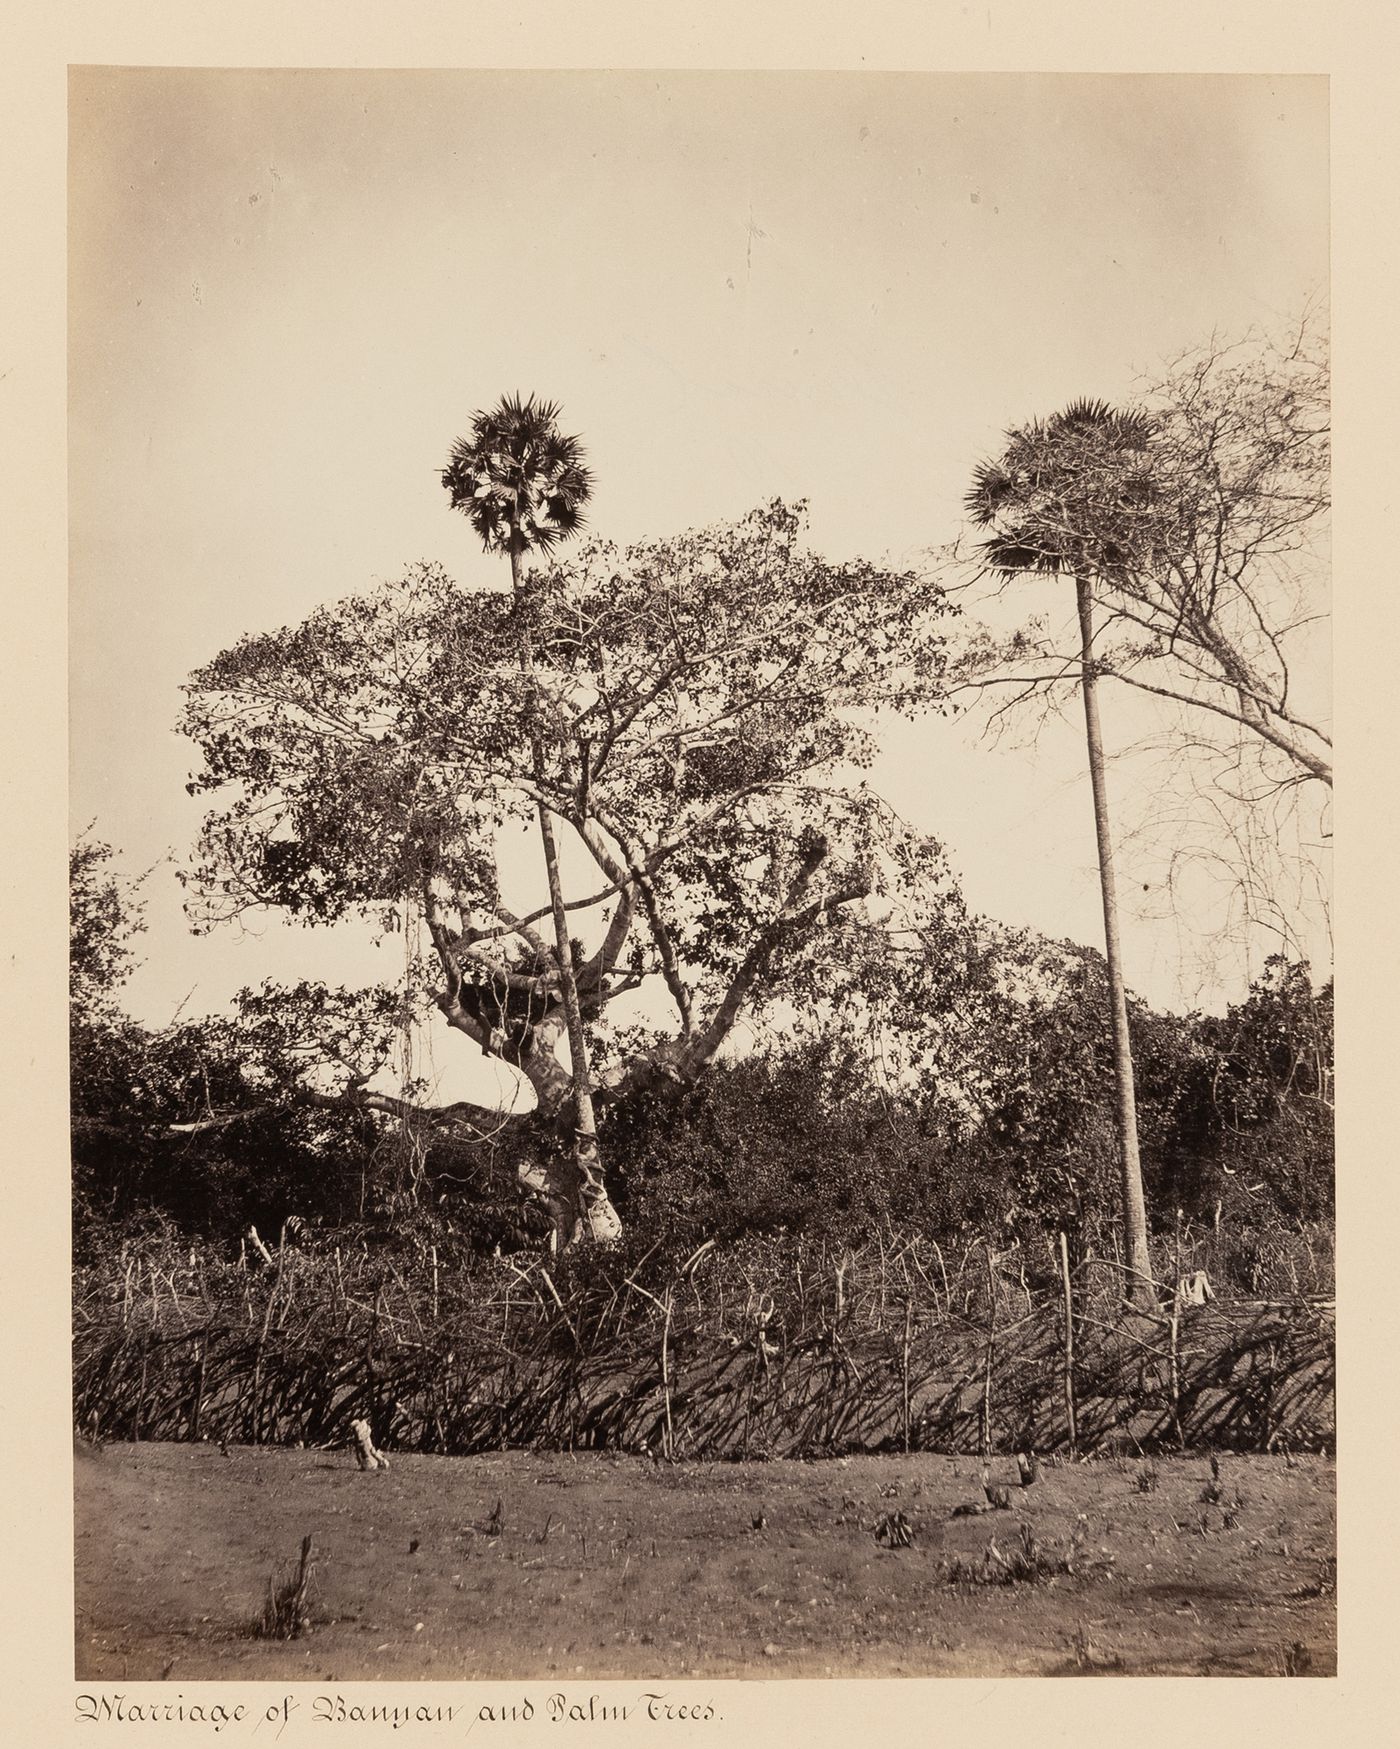 View of a banyan tree and palm trees, Ceylon (now Sri Lanka)